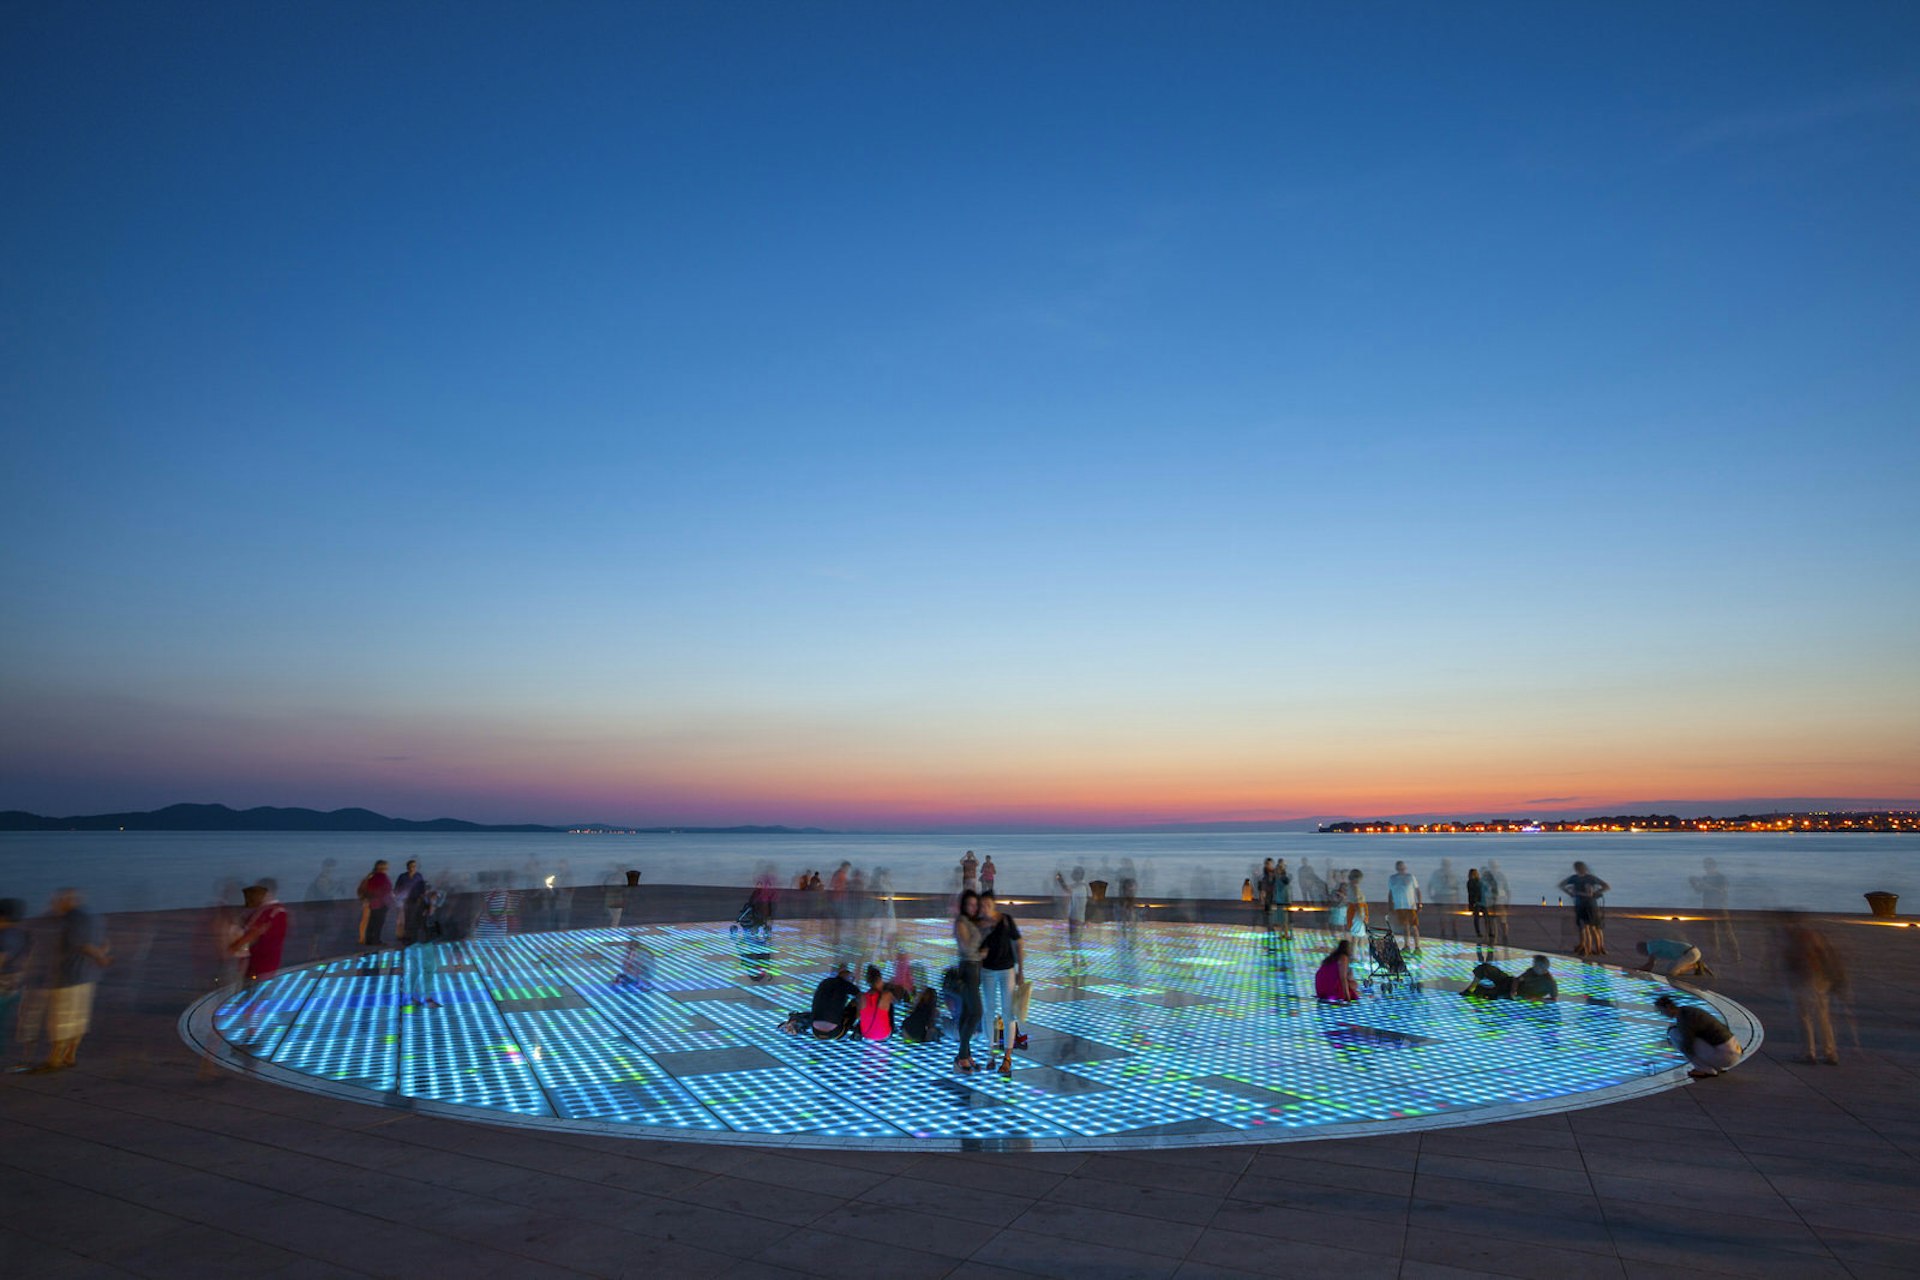 Zadar's quirky Sun Salutation lighting installation